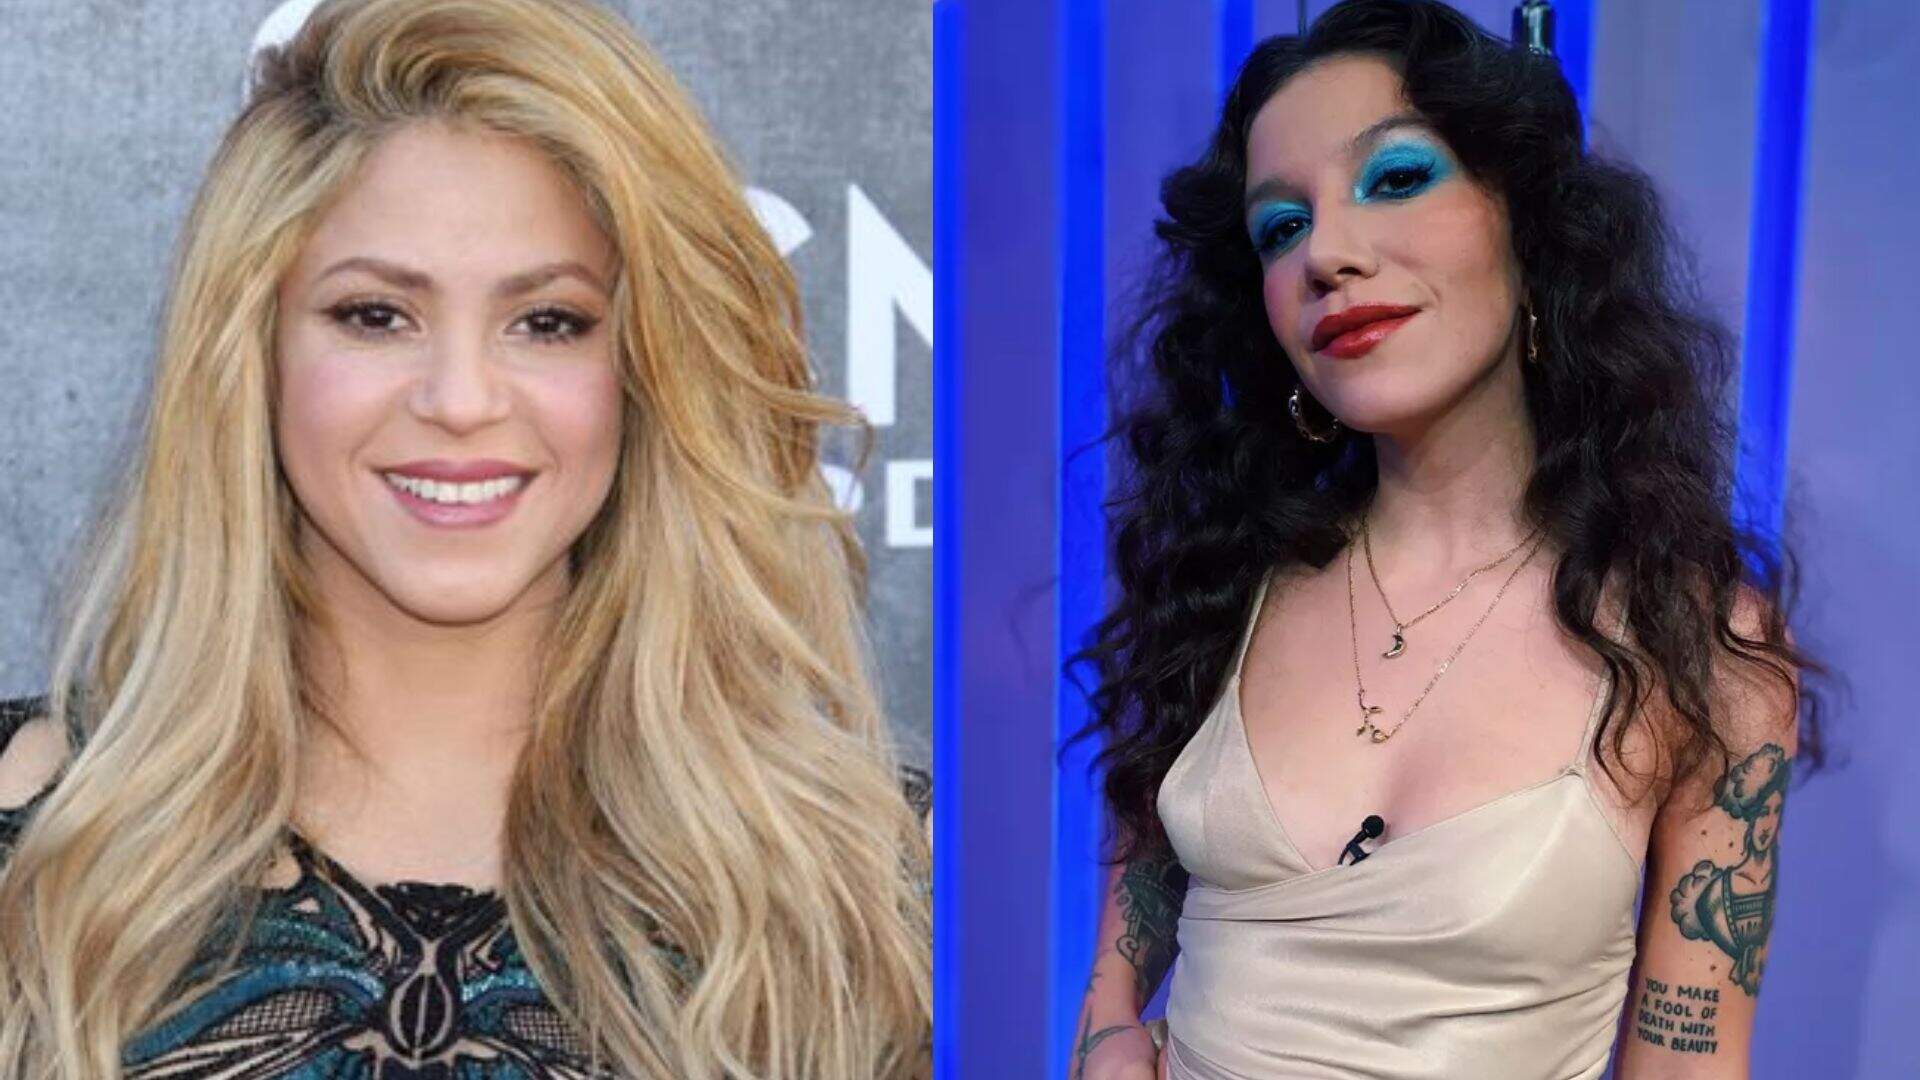 Ao vivo! Priscilla Alcântara imita Shakira, momento viraliza e motivo impressiona: “Igual!” - Metropolitana FM